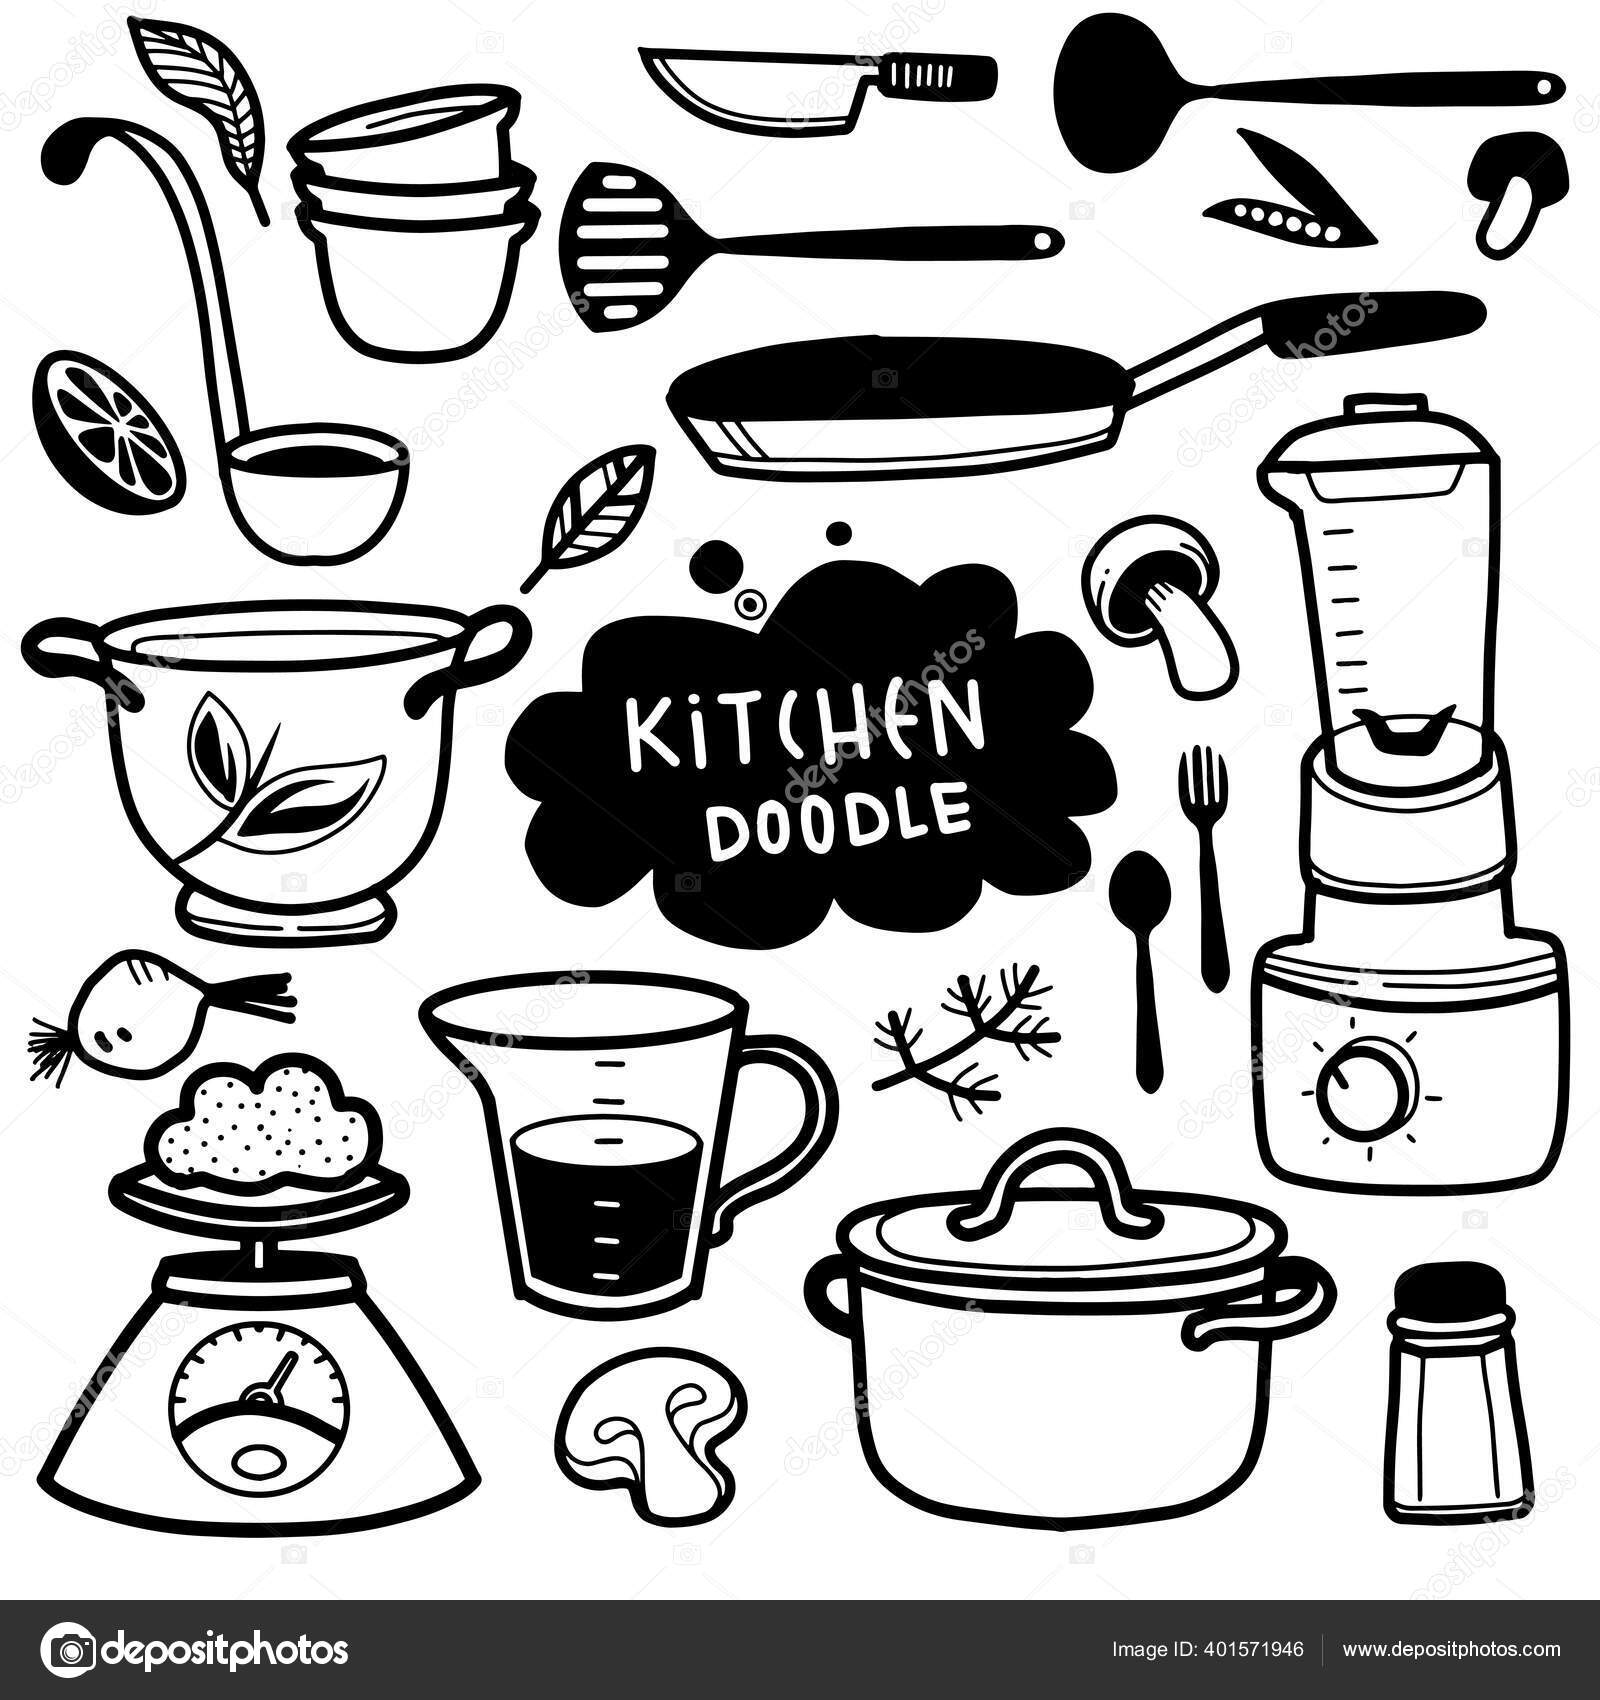 Kitchen Utensils Hand Draw Illustration Graphic by Dikas Studio